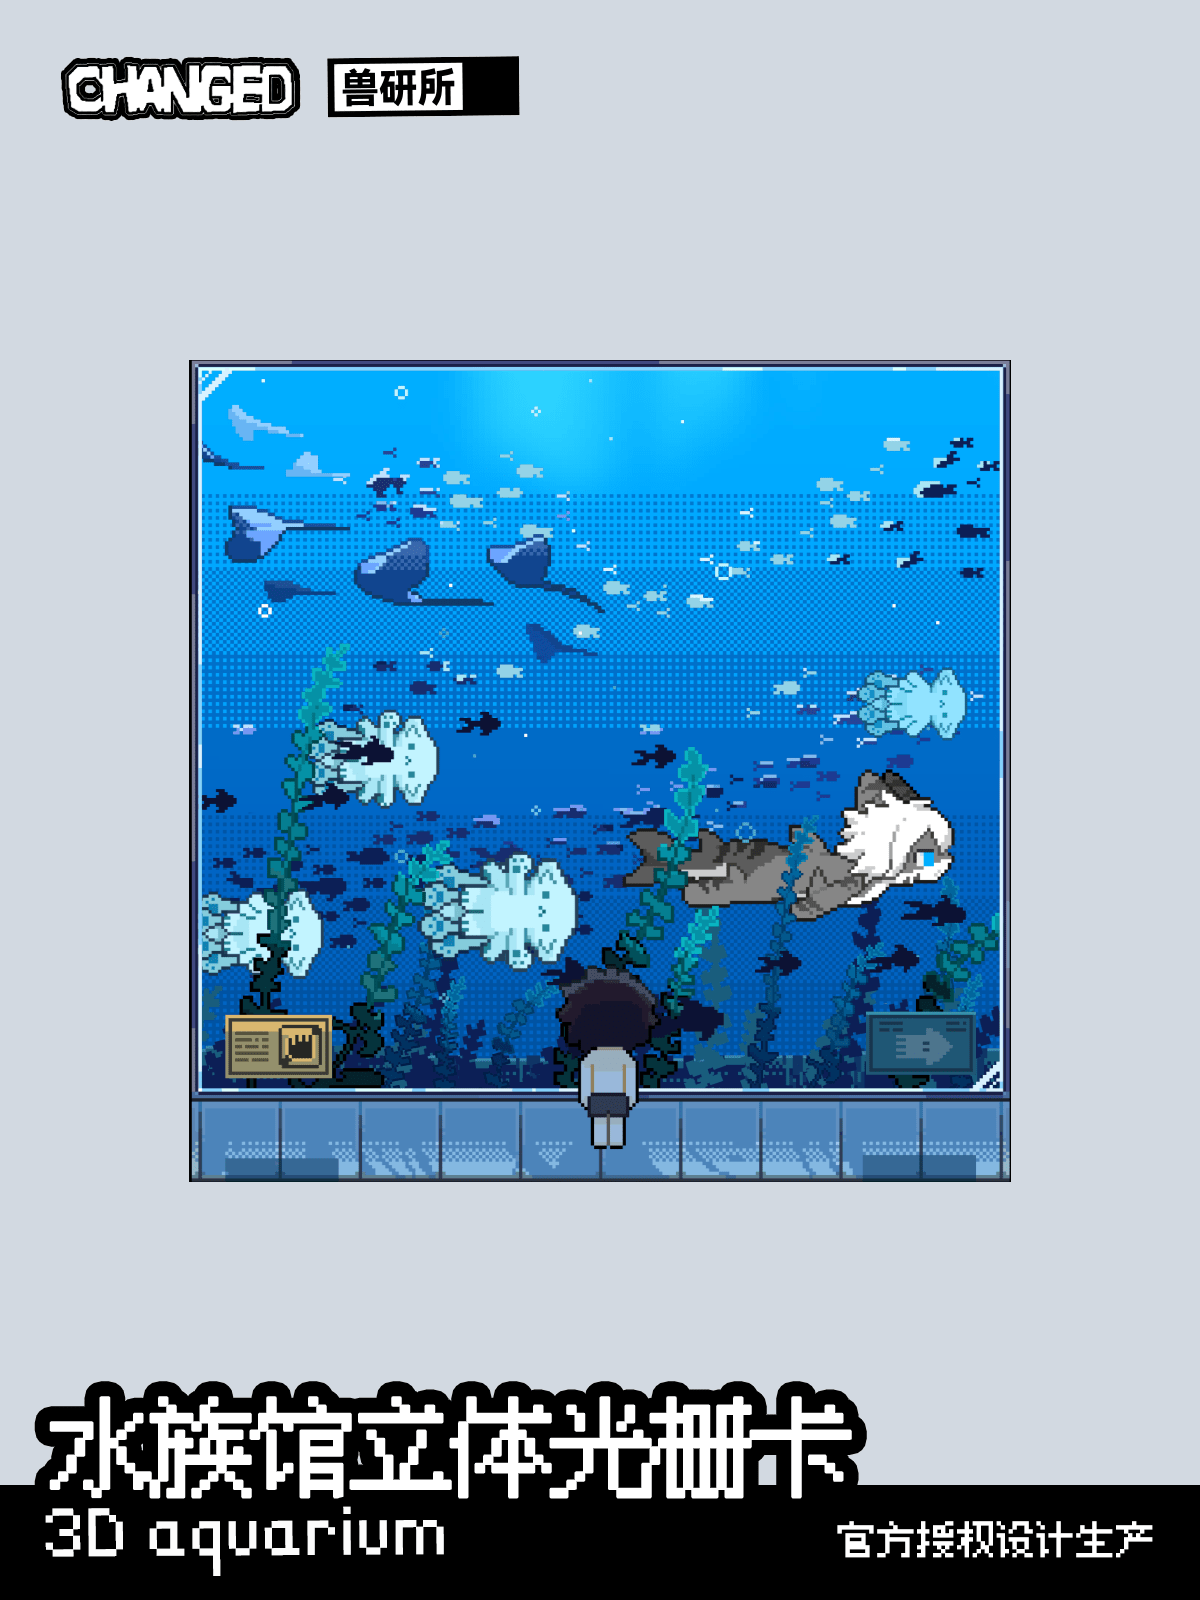 Changed Aquarium 3D Lenticular Card Furyy 34574:463183